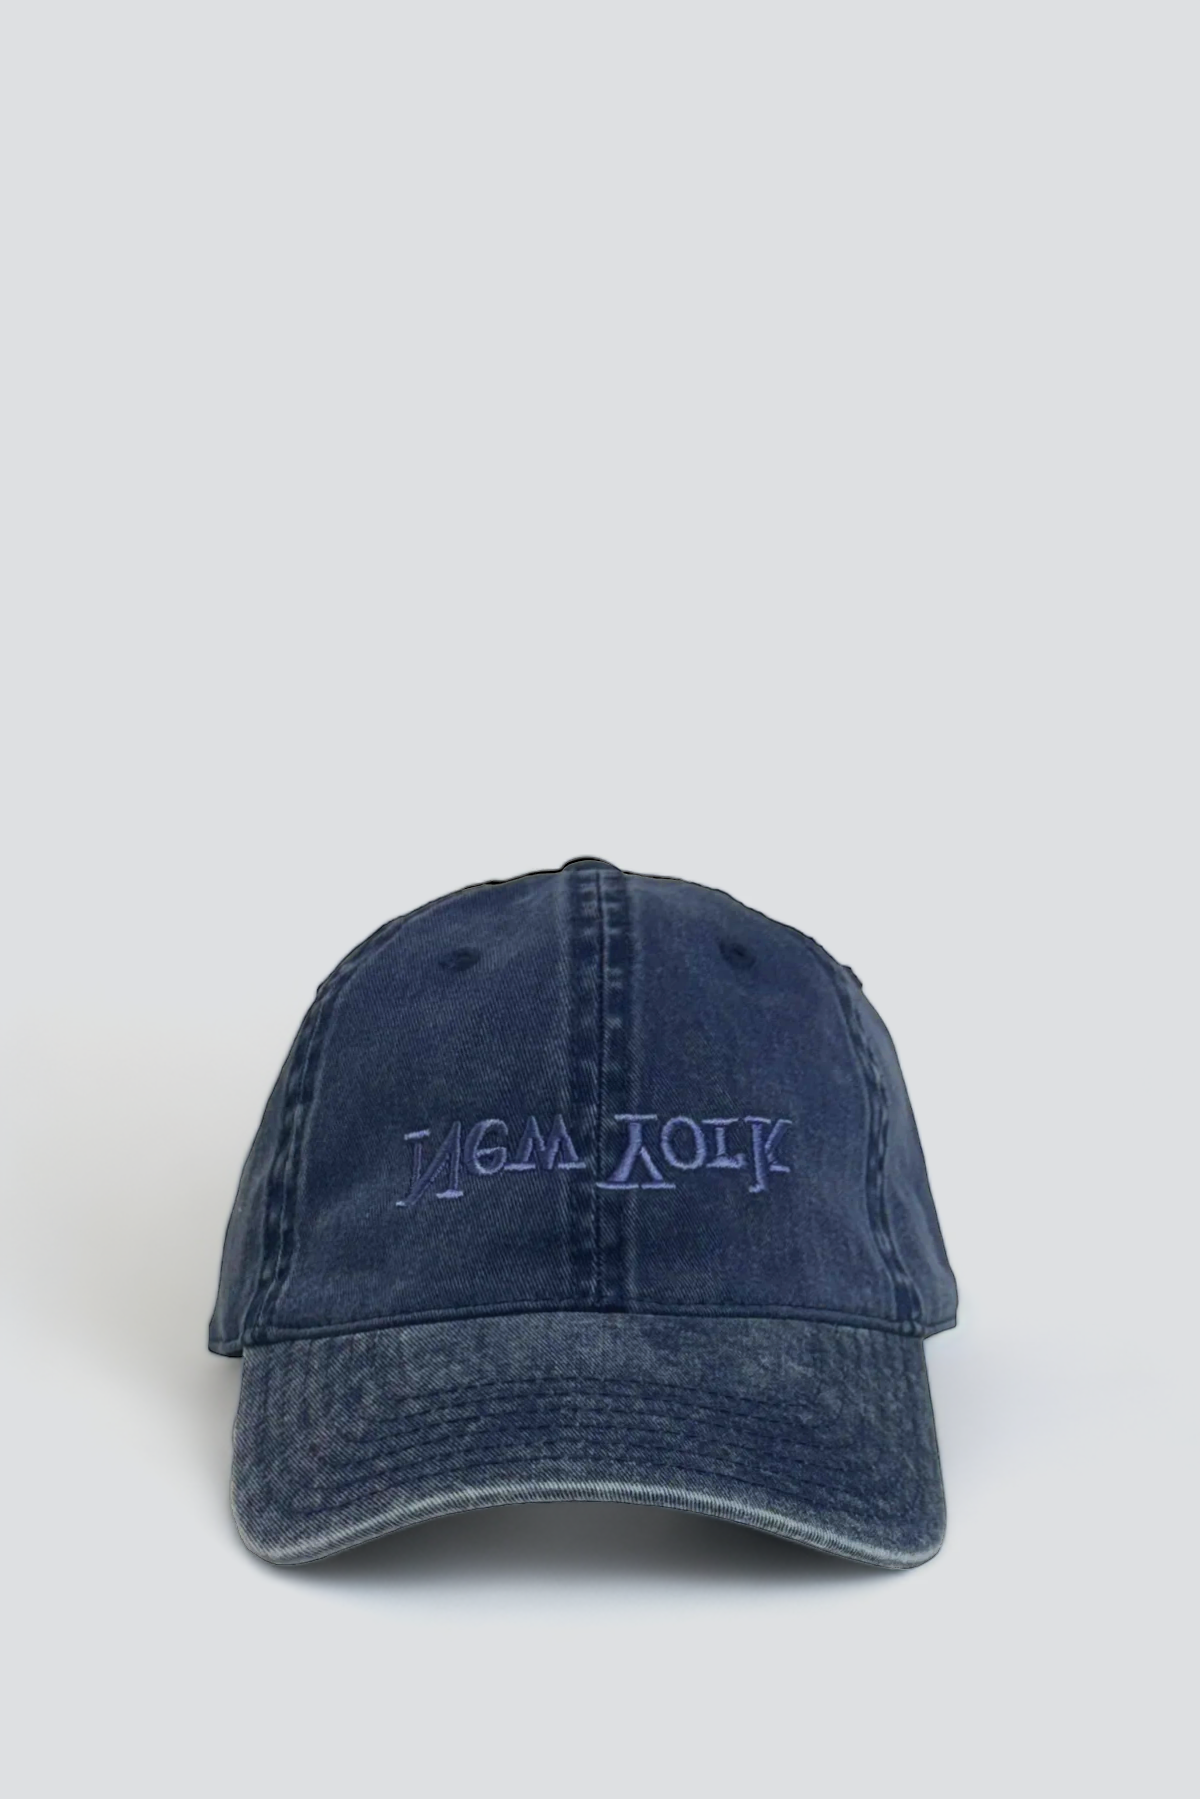 New York Embroidered Hat - Washed Indigo